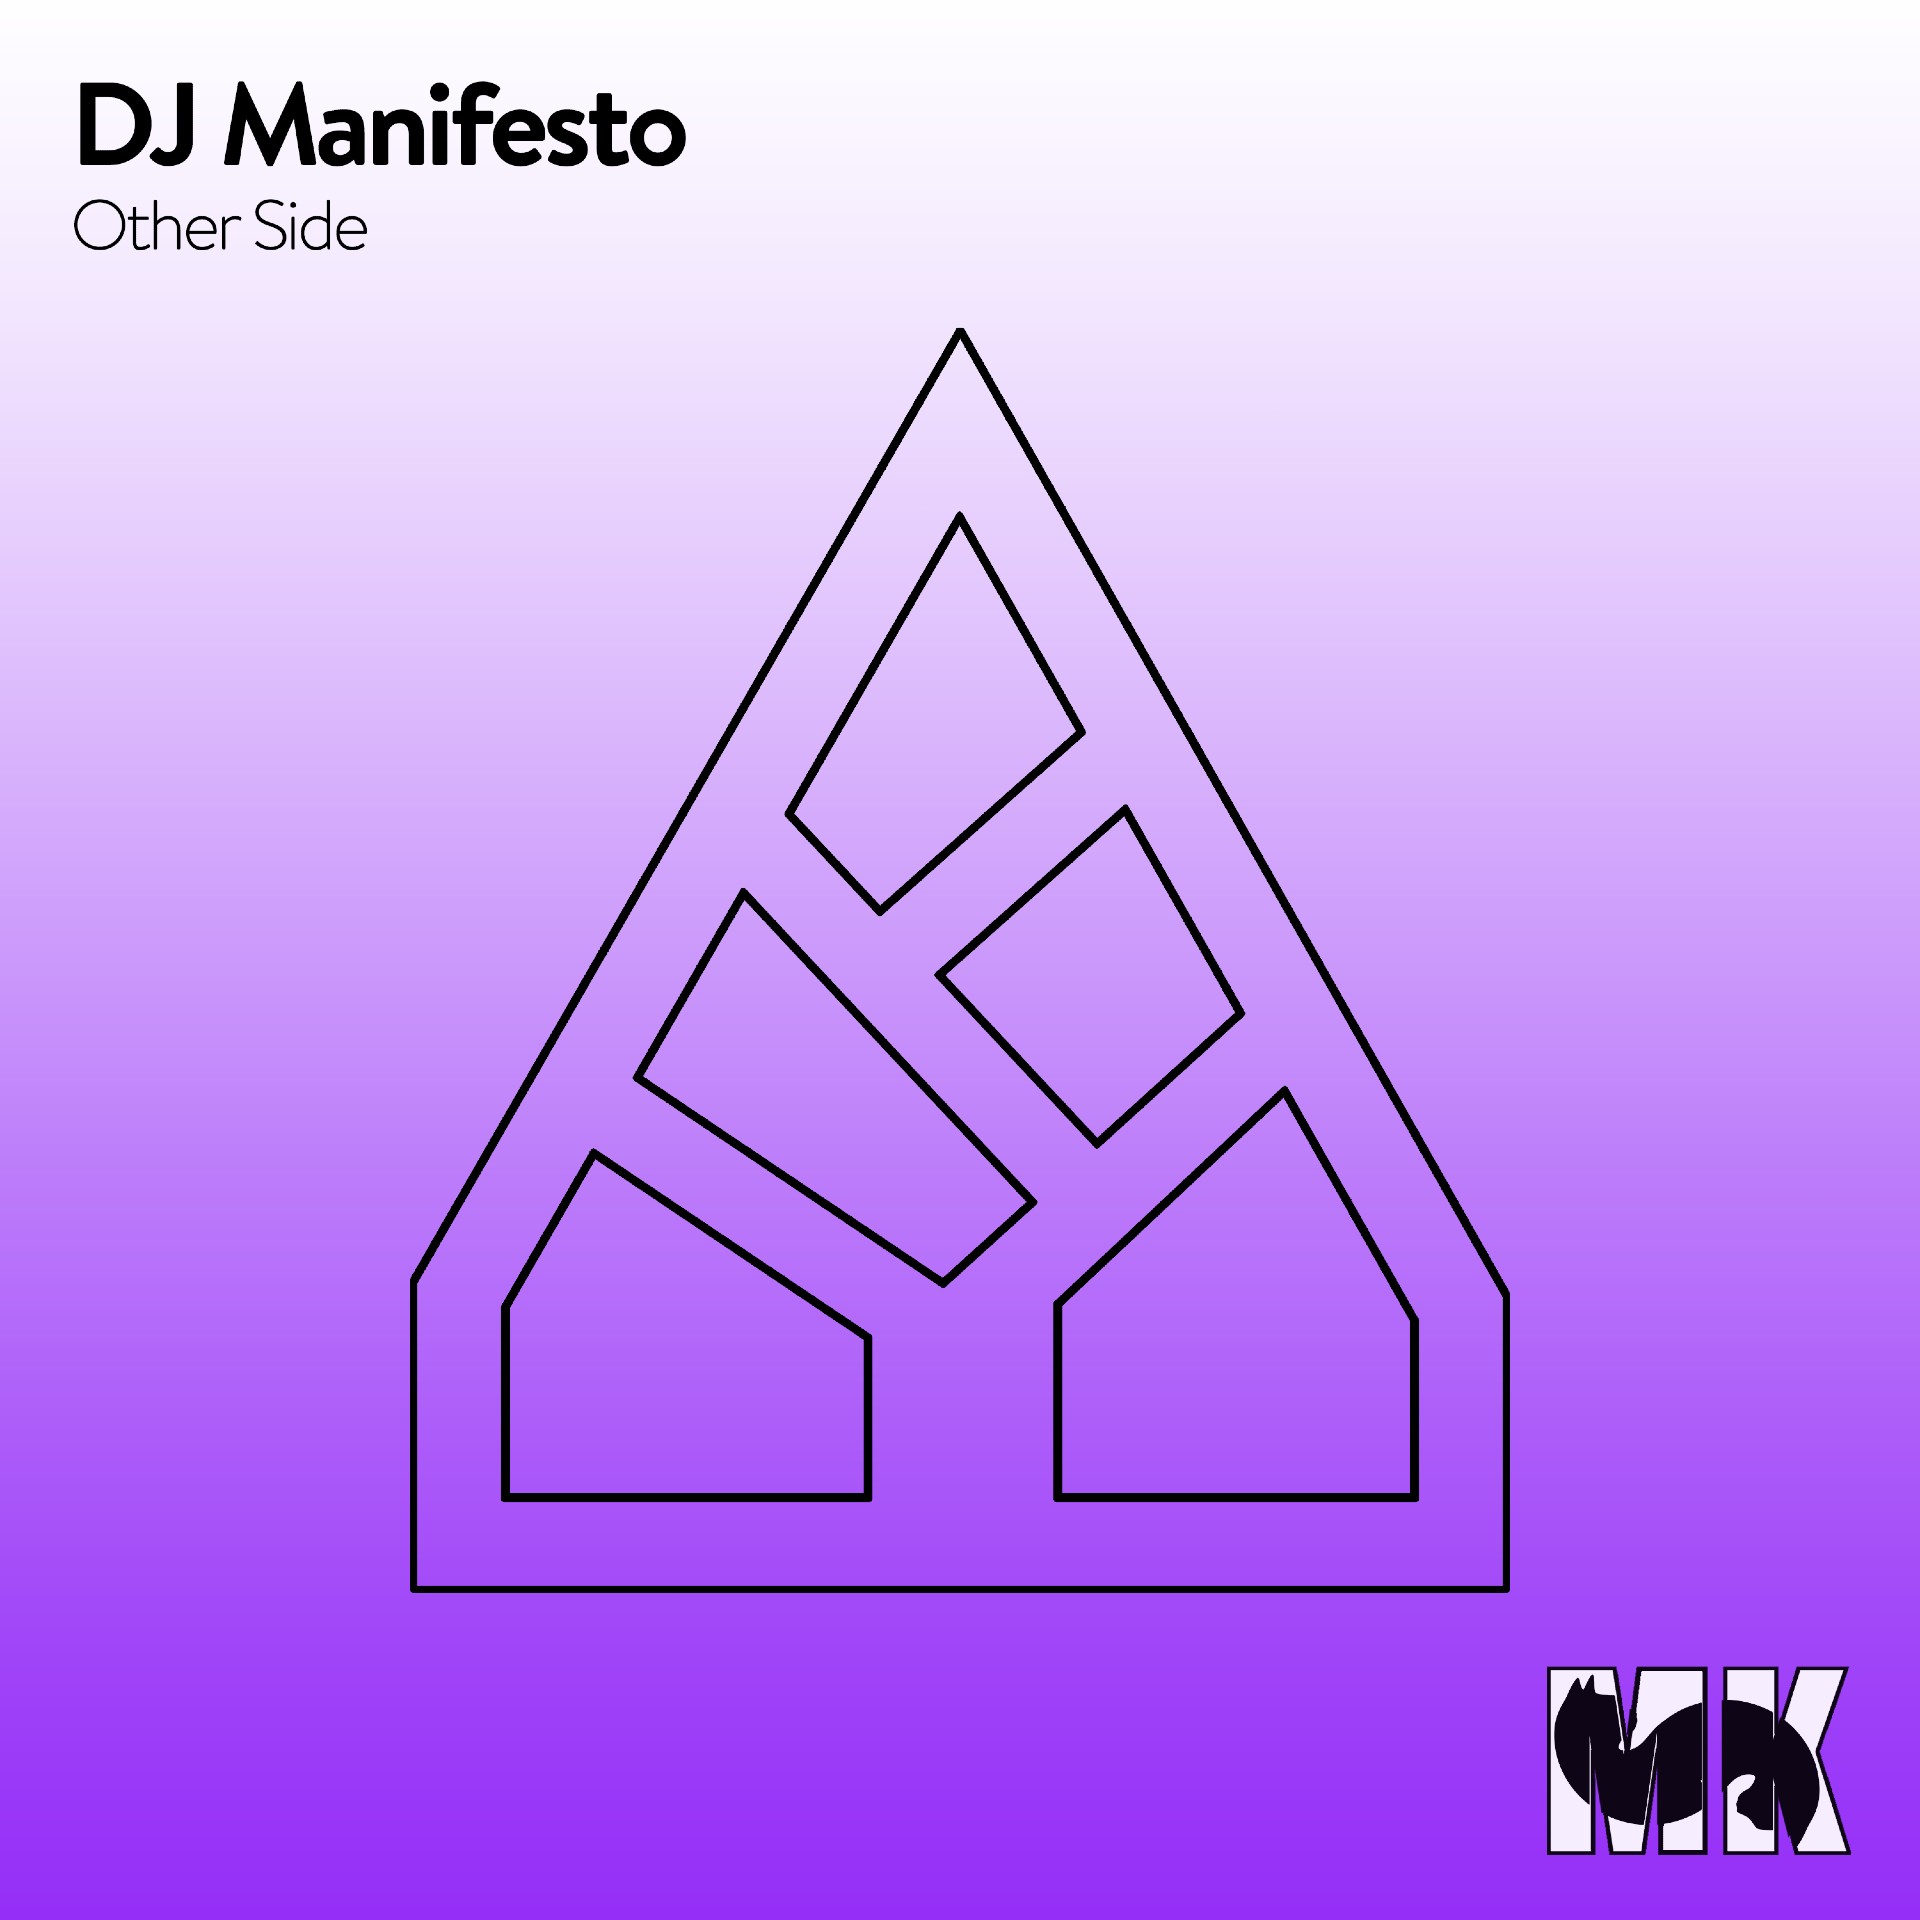 DJ Manifesto “Other Side” single artwork